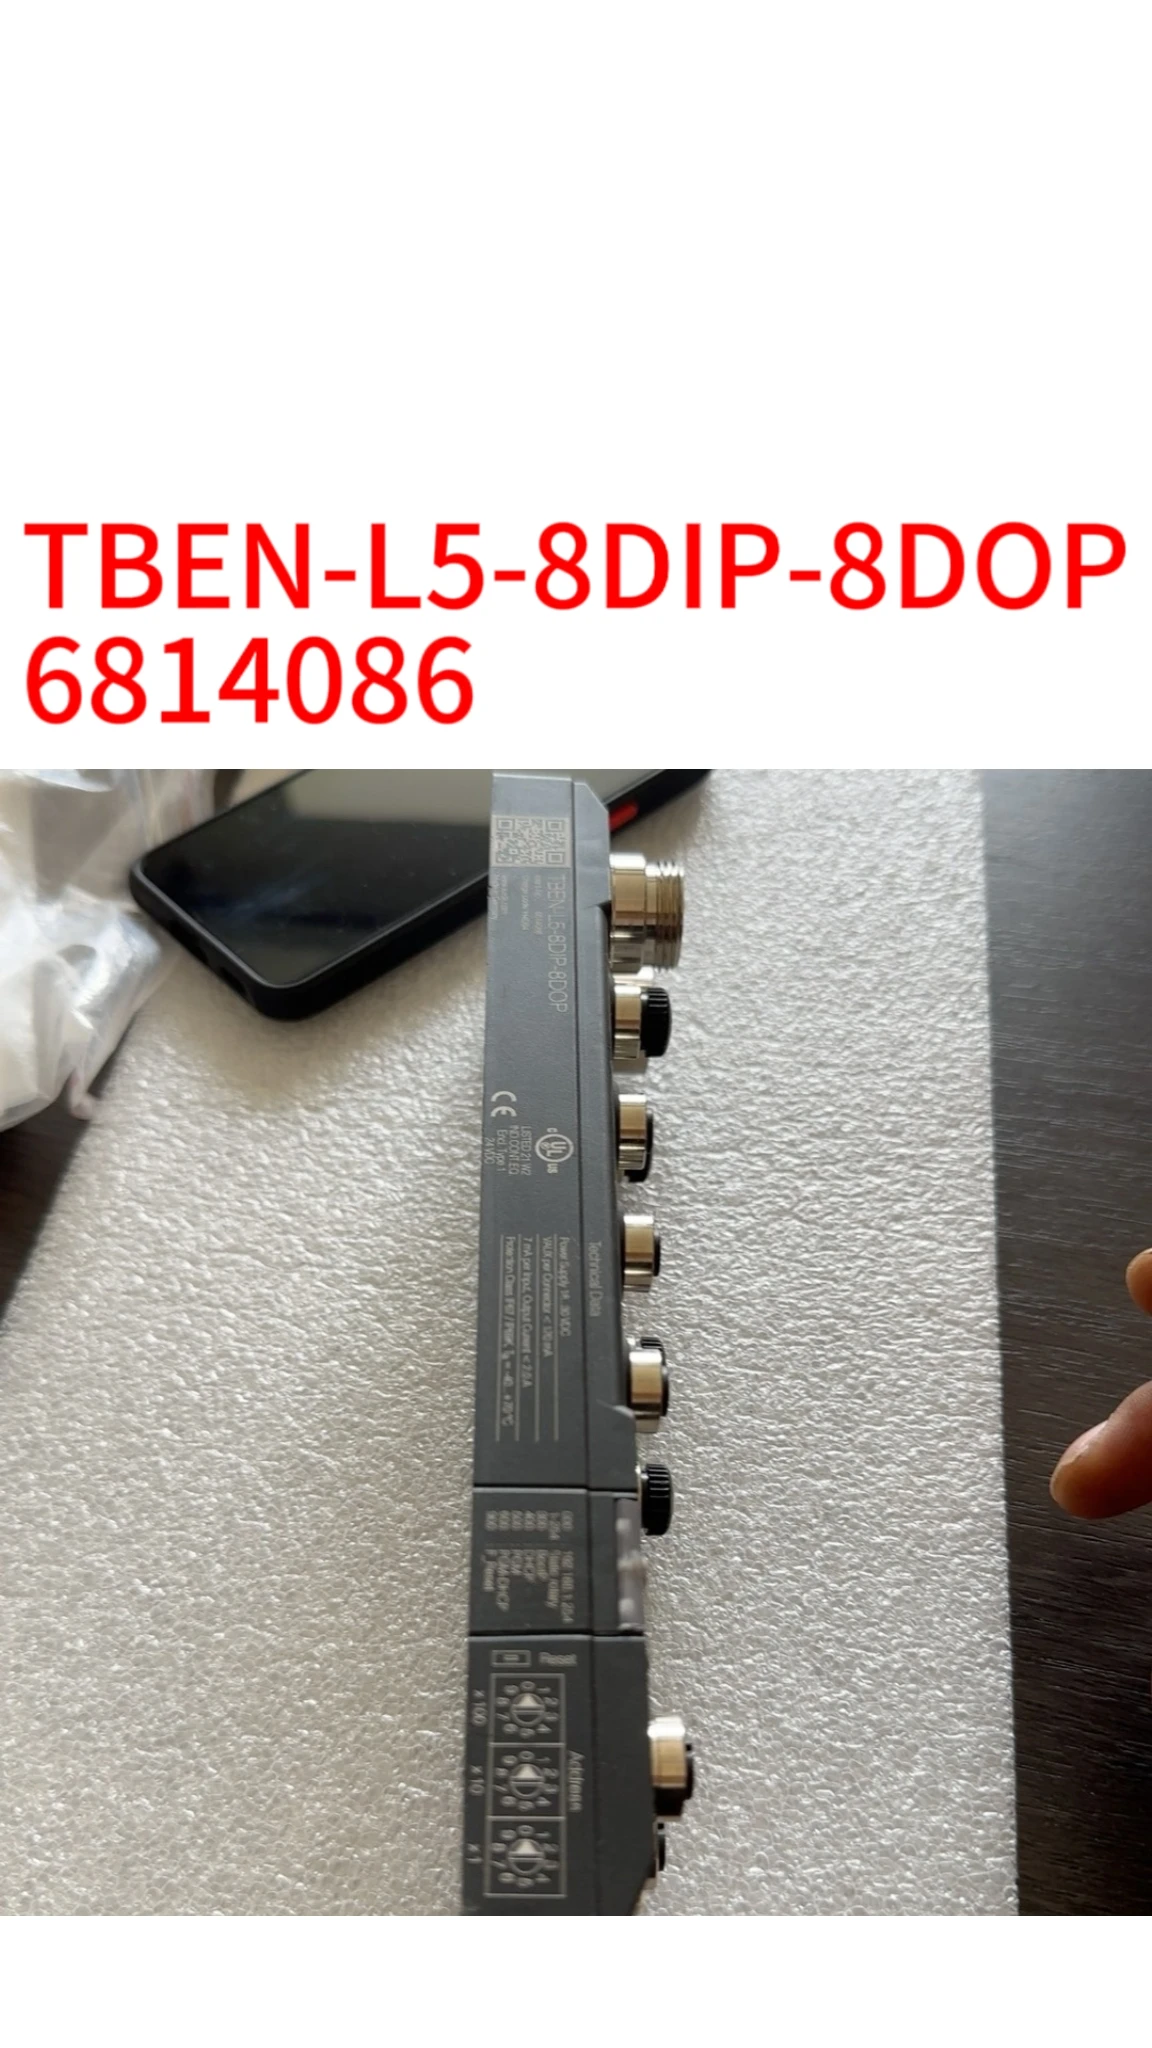 

Brand New TBEN-L5-8DIP-8DOP 6814086